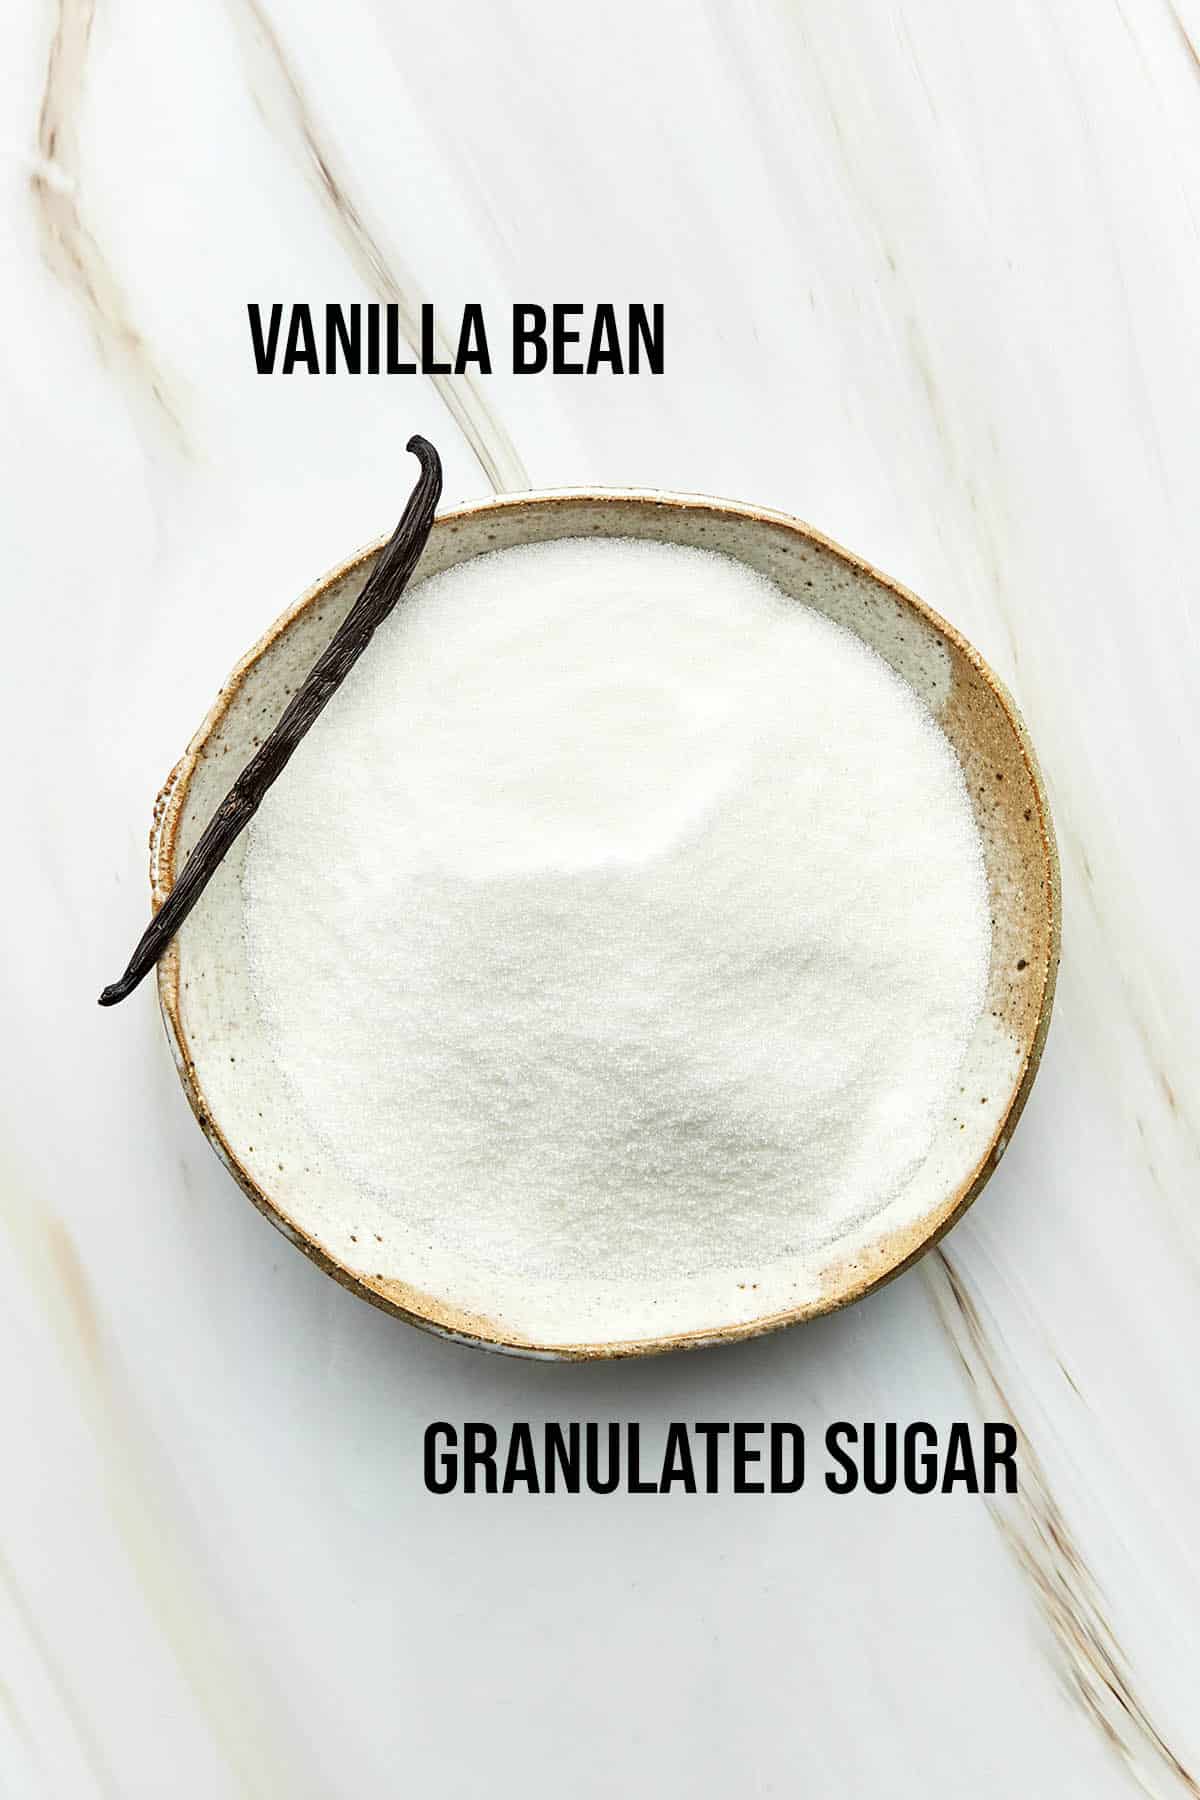 Vanilla sugar ingredients with labels.